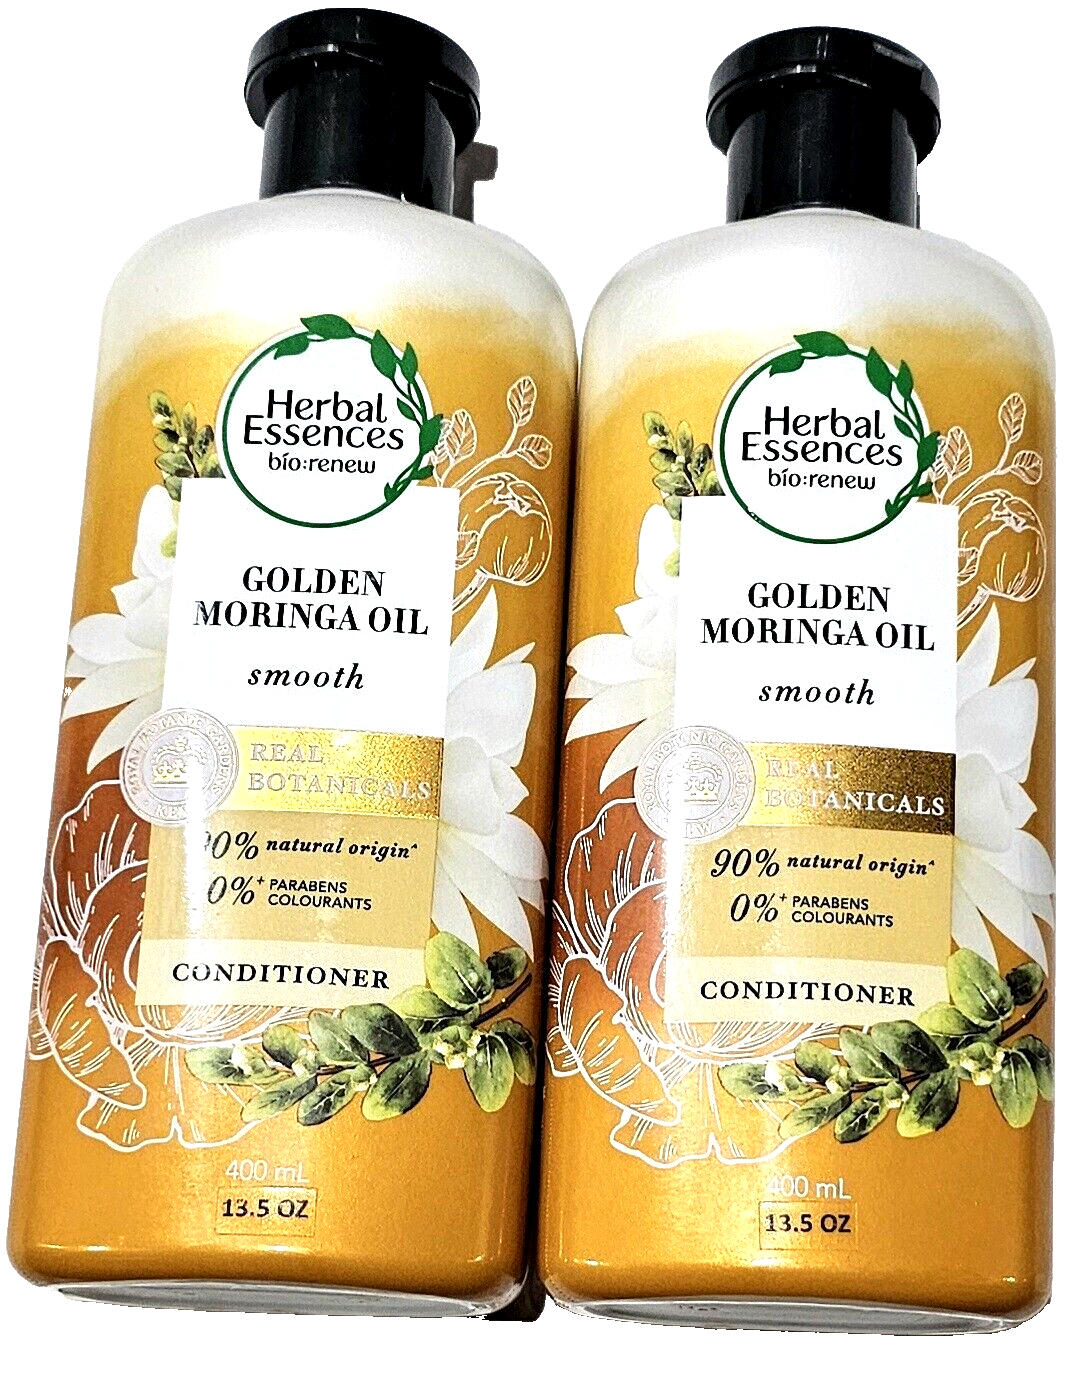 2 Pack Herbal Essences Bio Renew Golden Moringa Oil Smooth Botanicals 13.5oz - $29.99